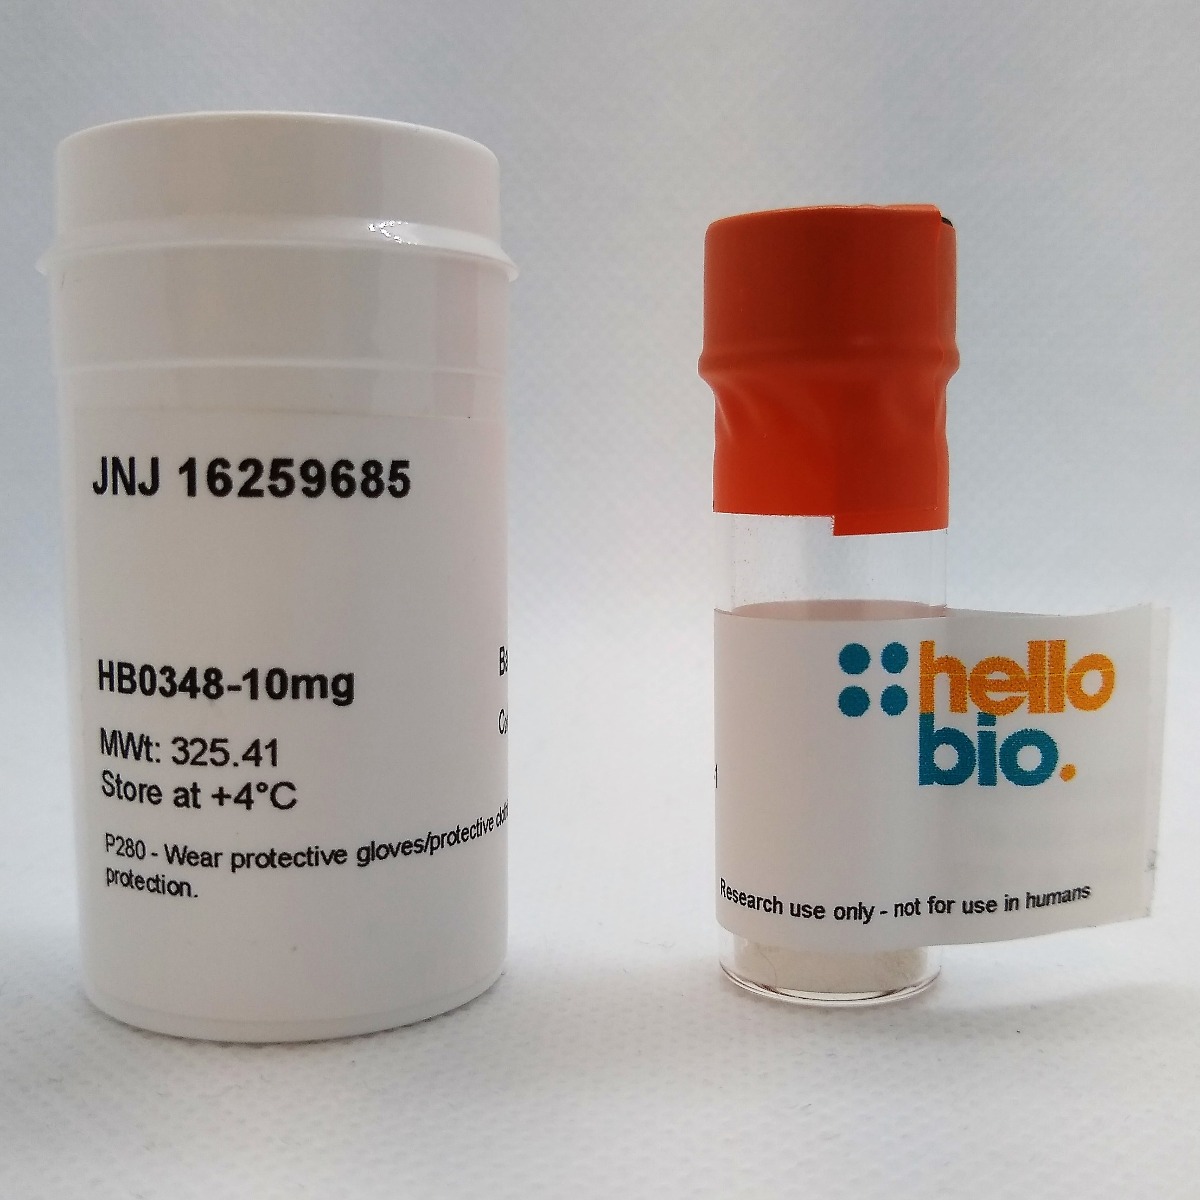 JNJ 16259685 product vial image | Hello Bio